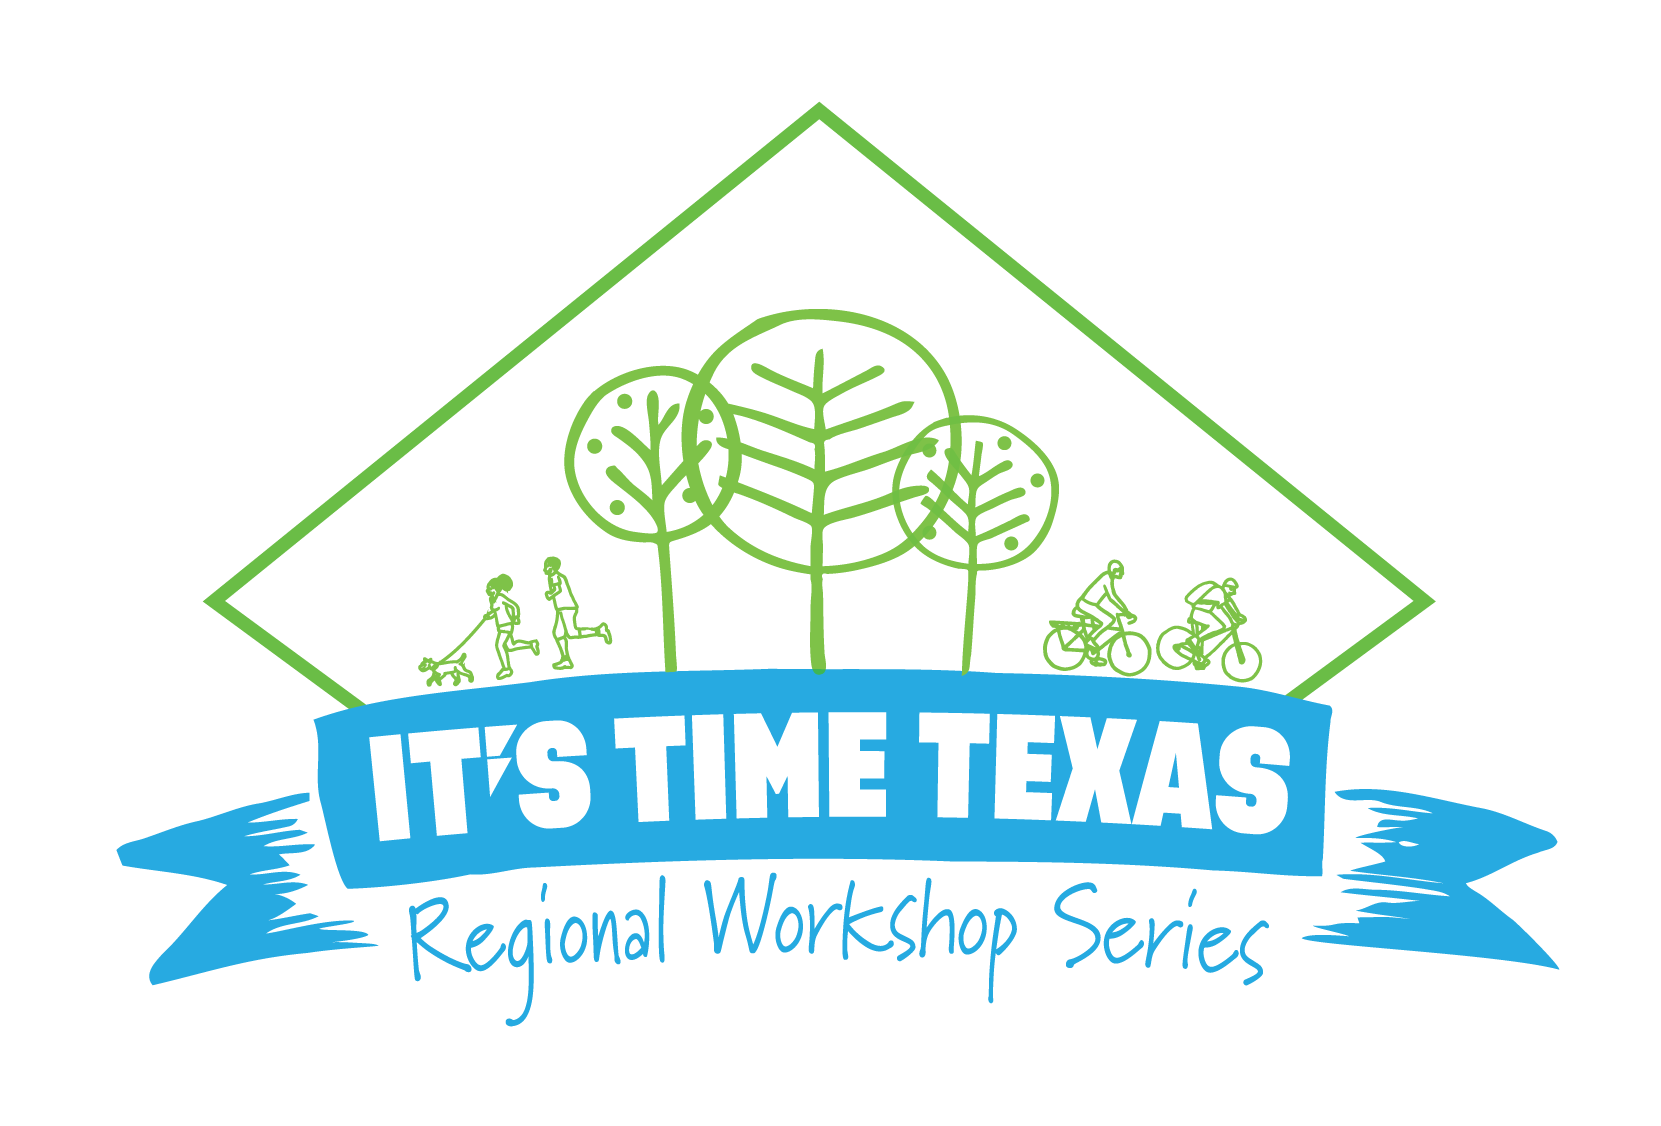 It's Time Texas Regional Workshop Series logo